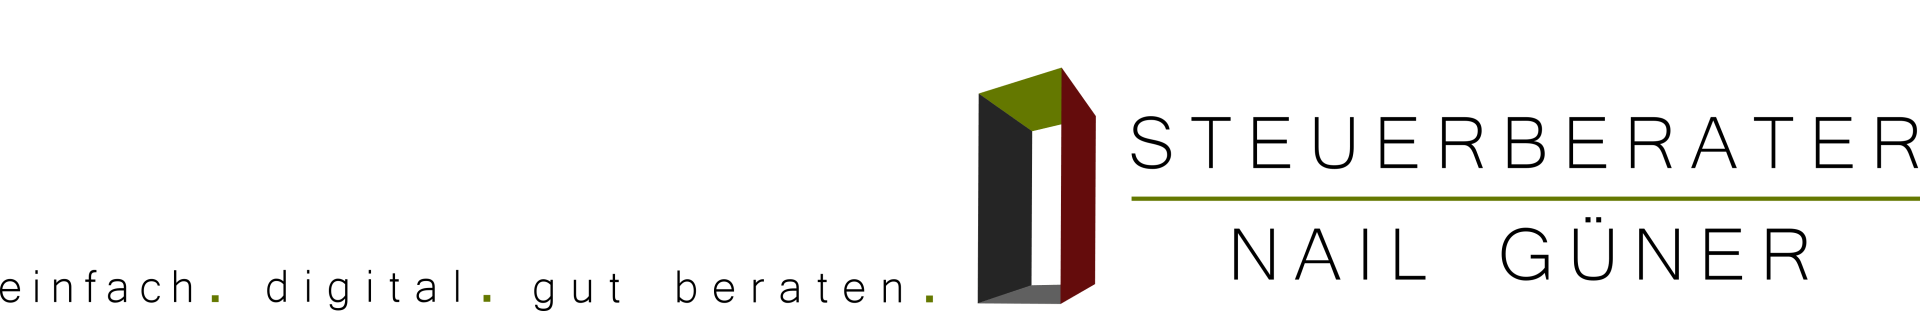 Steuerberater Nail Güner logo